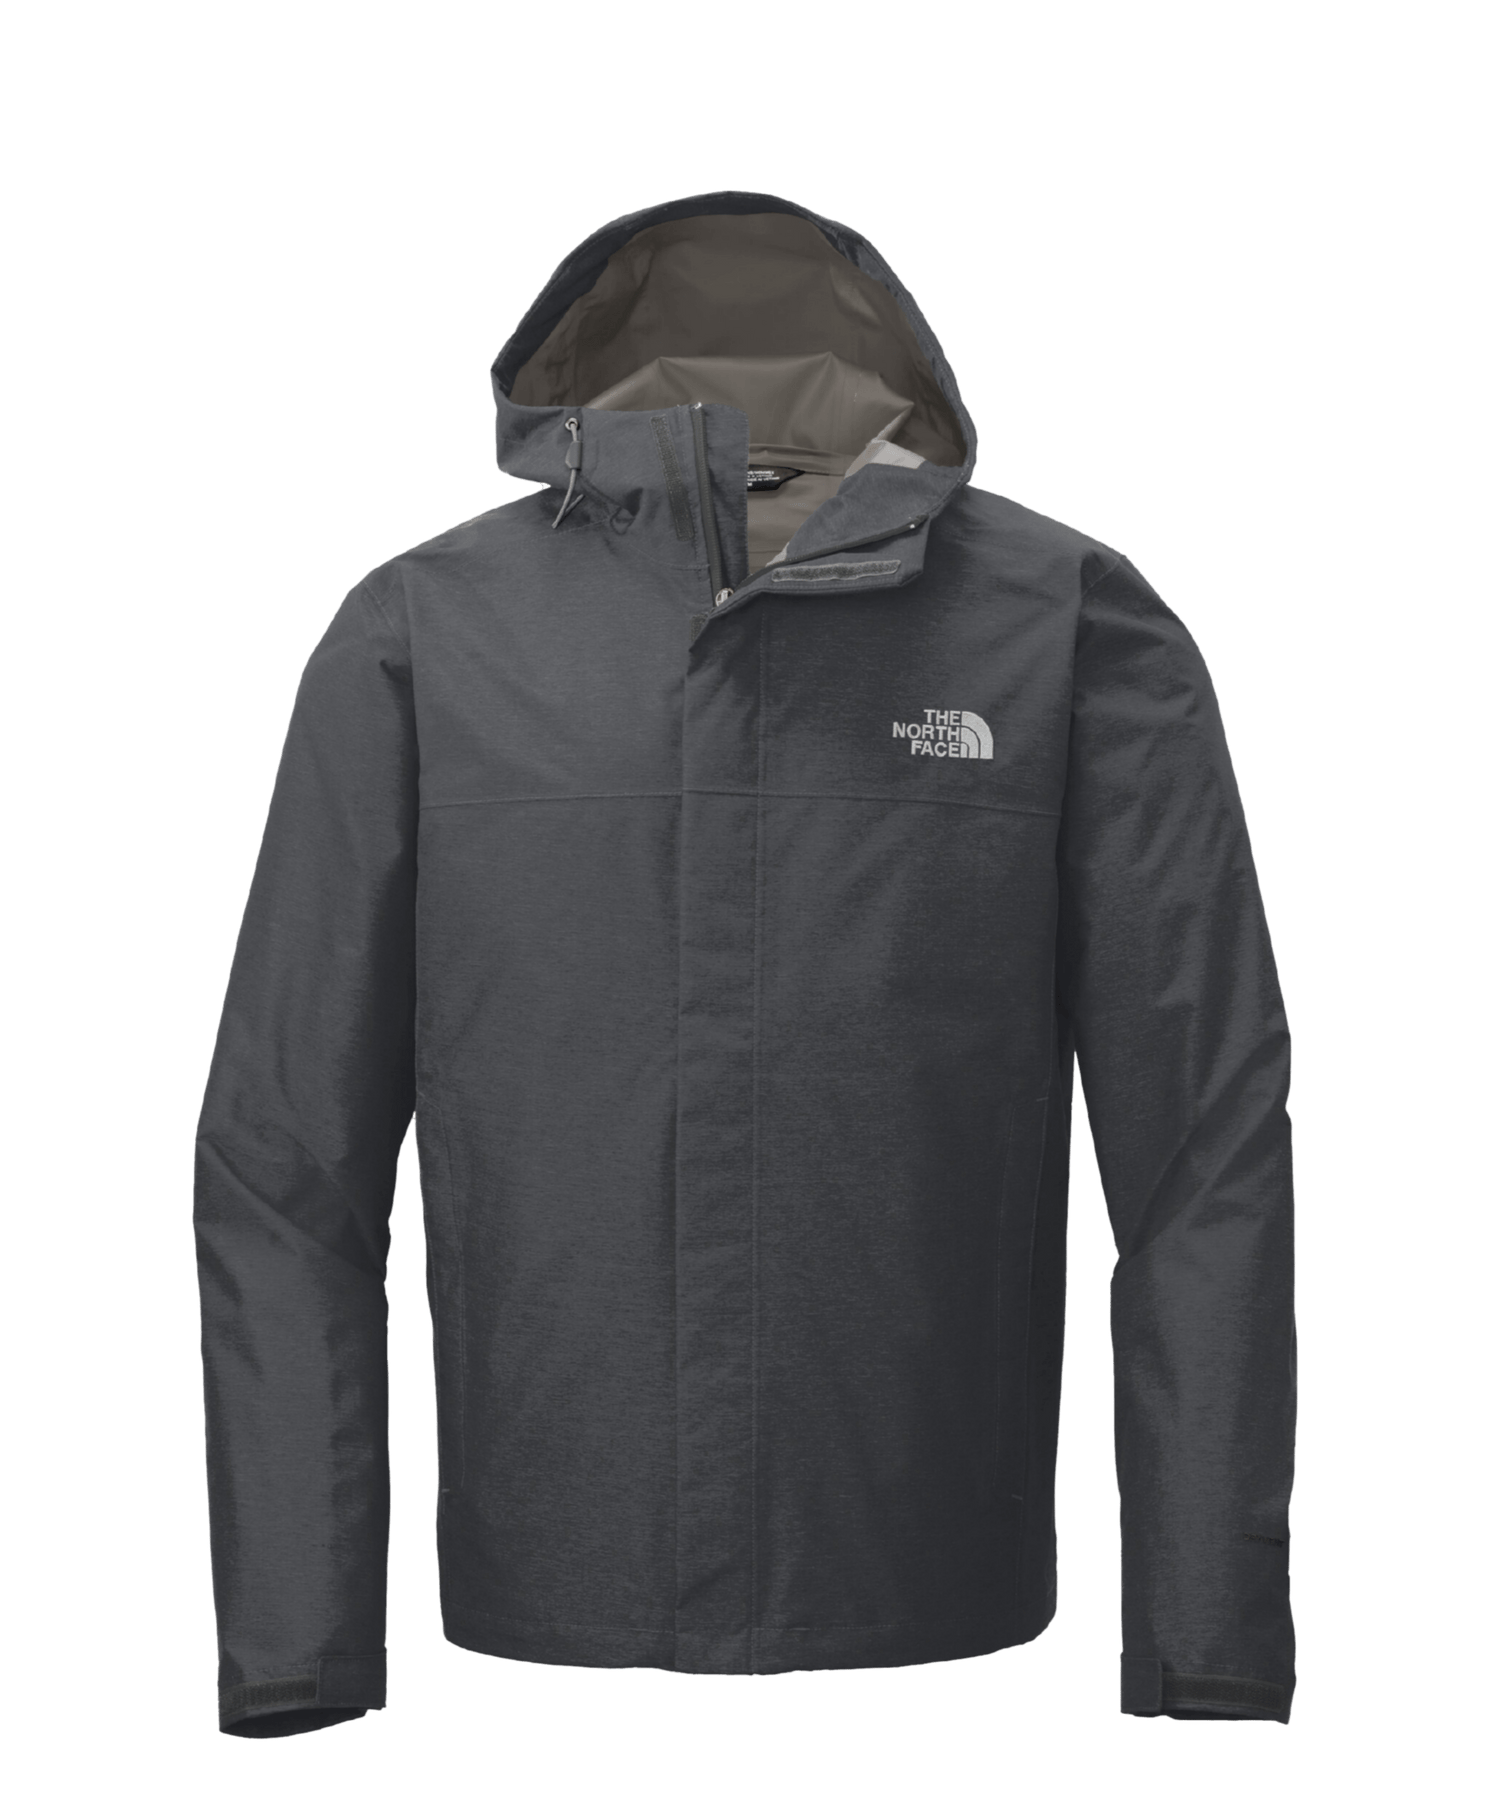 Custom The North Face DryVent Rain Jacket